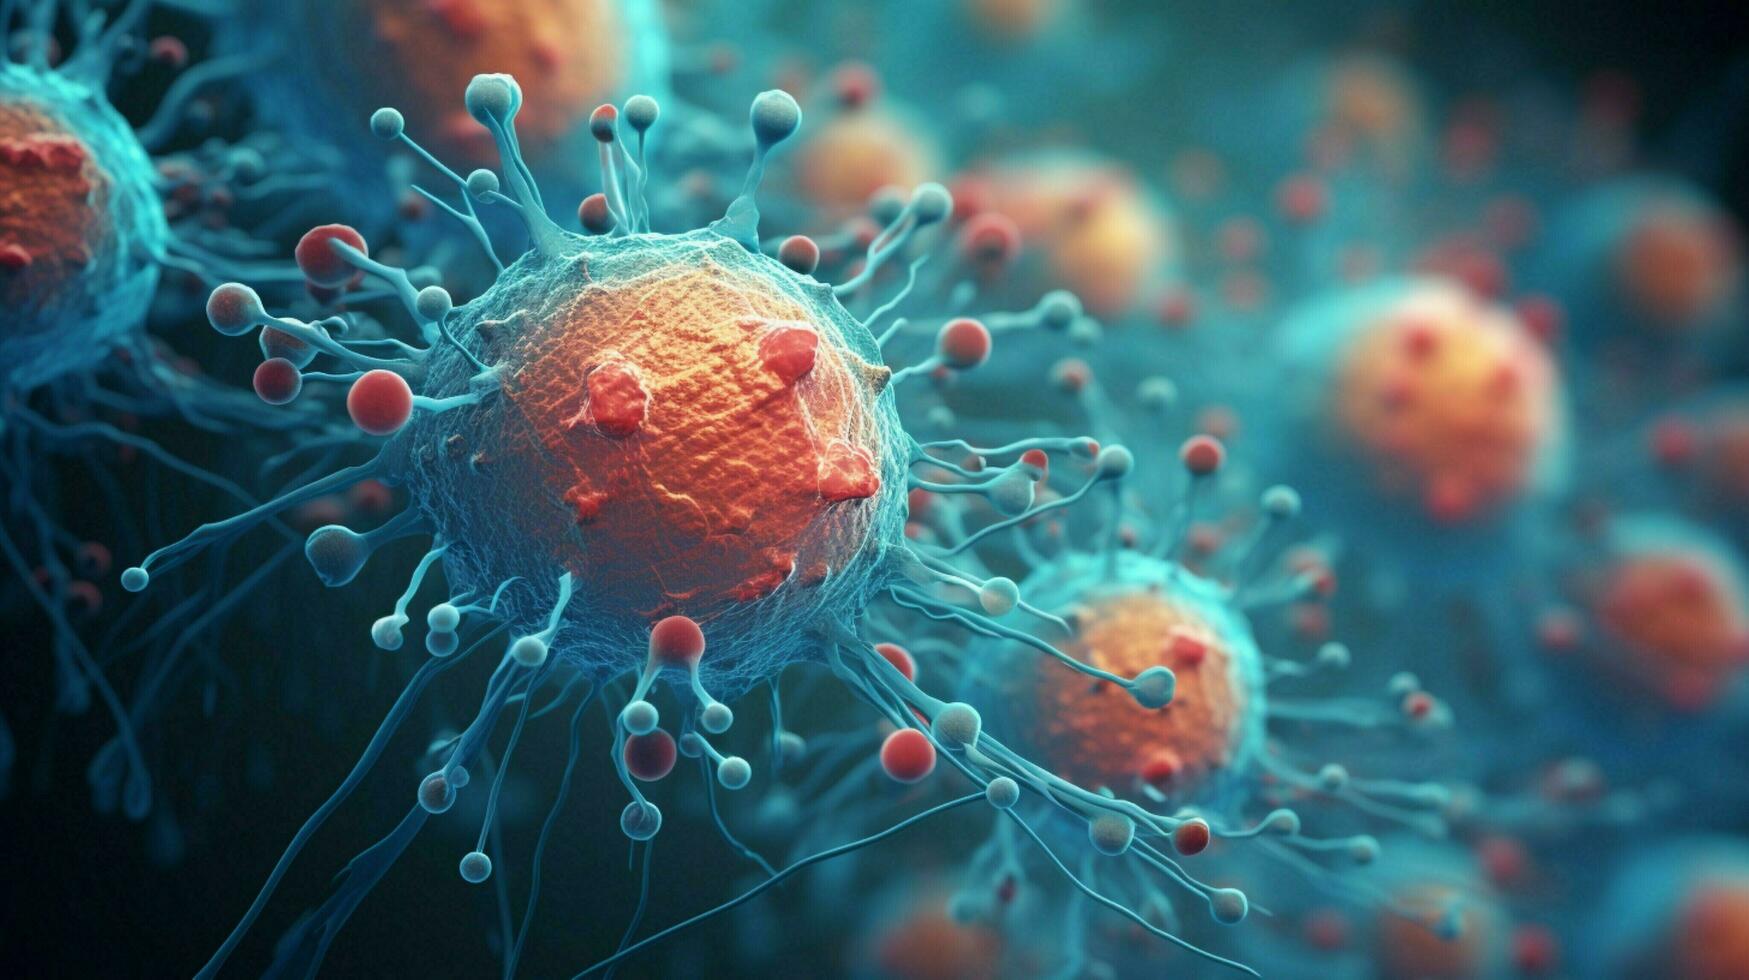 molekular Struktur von Krebs Zellen unter Mikroskop foto